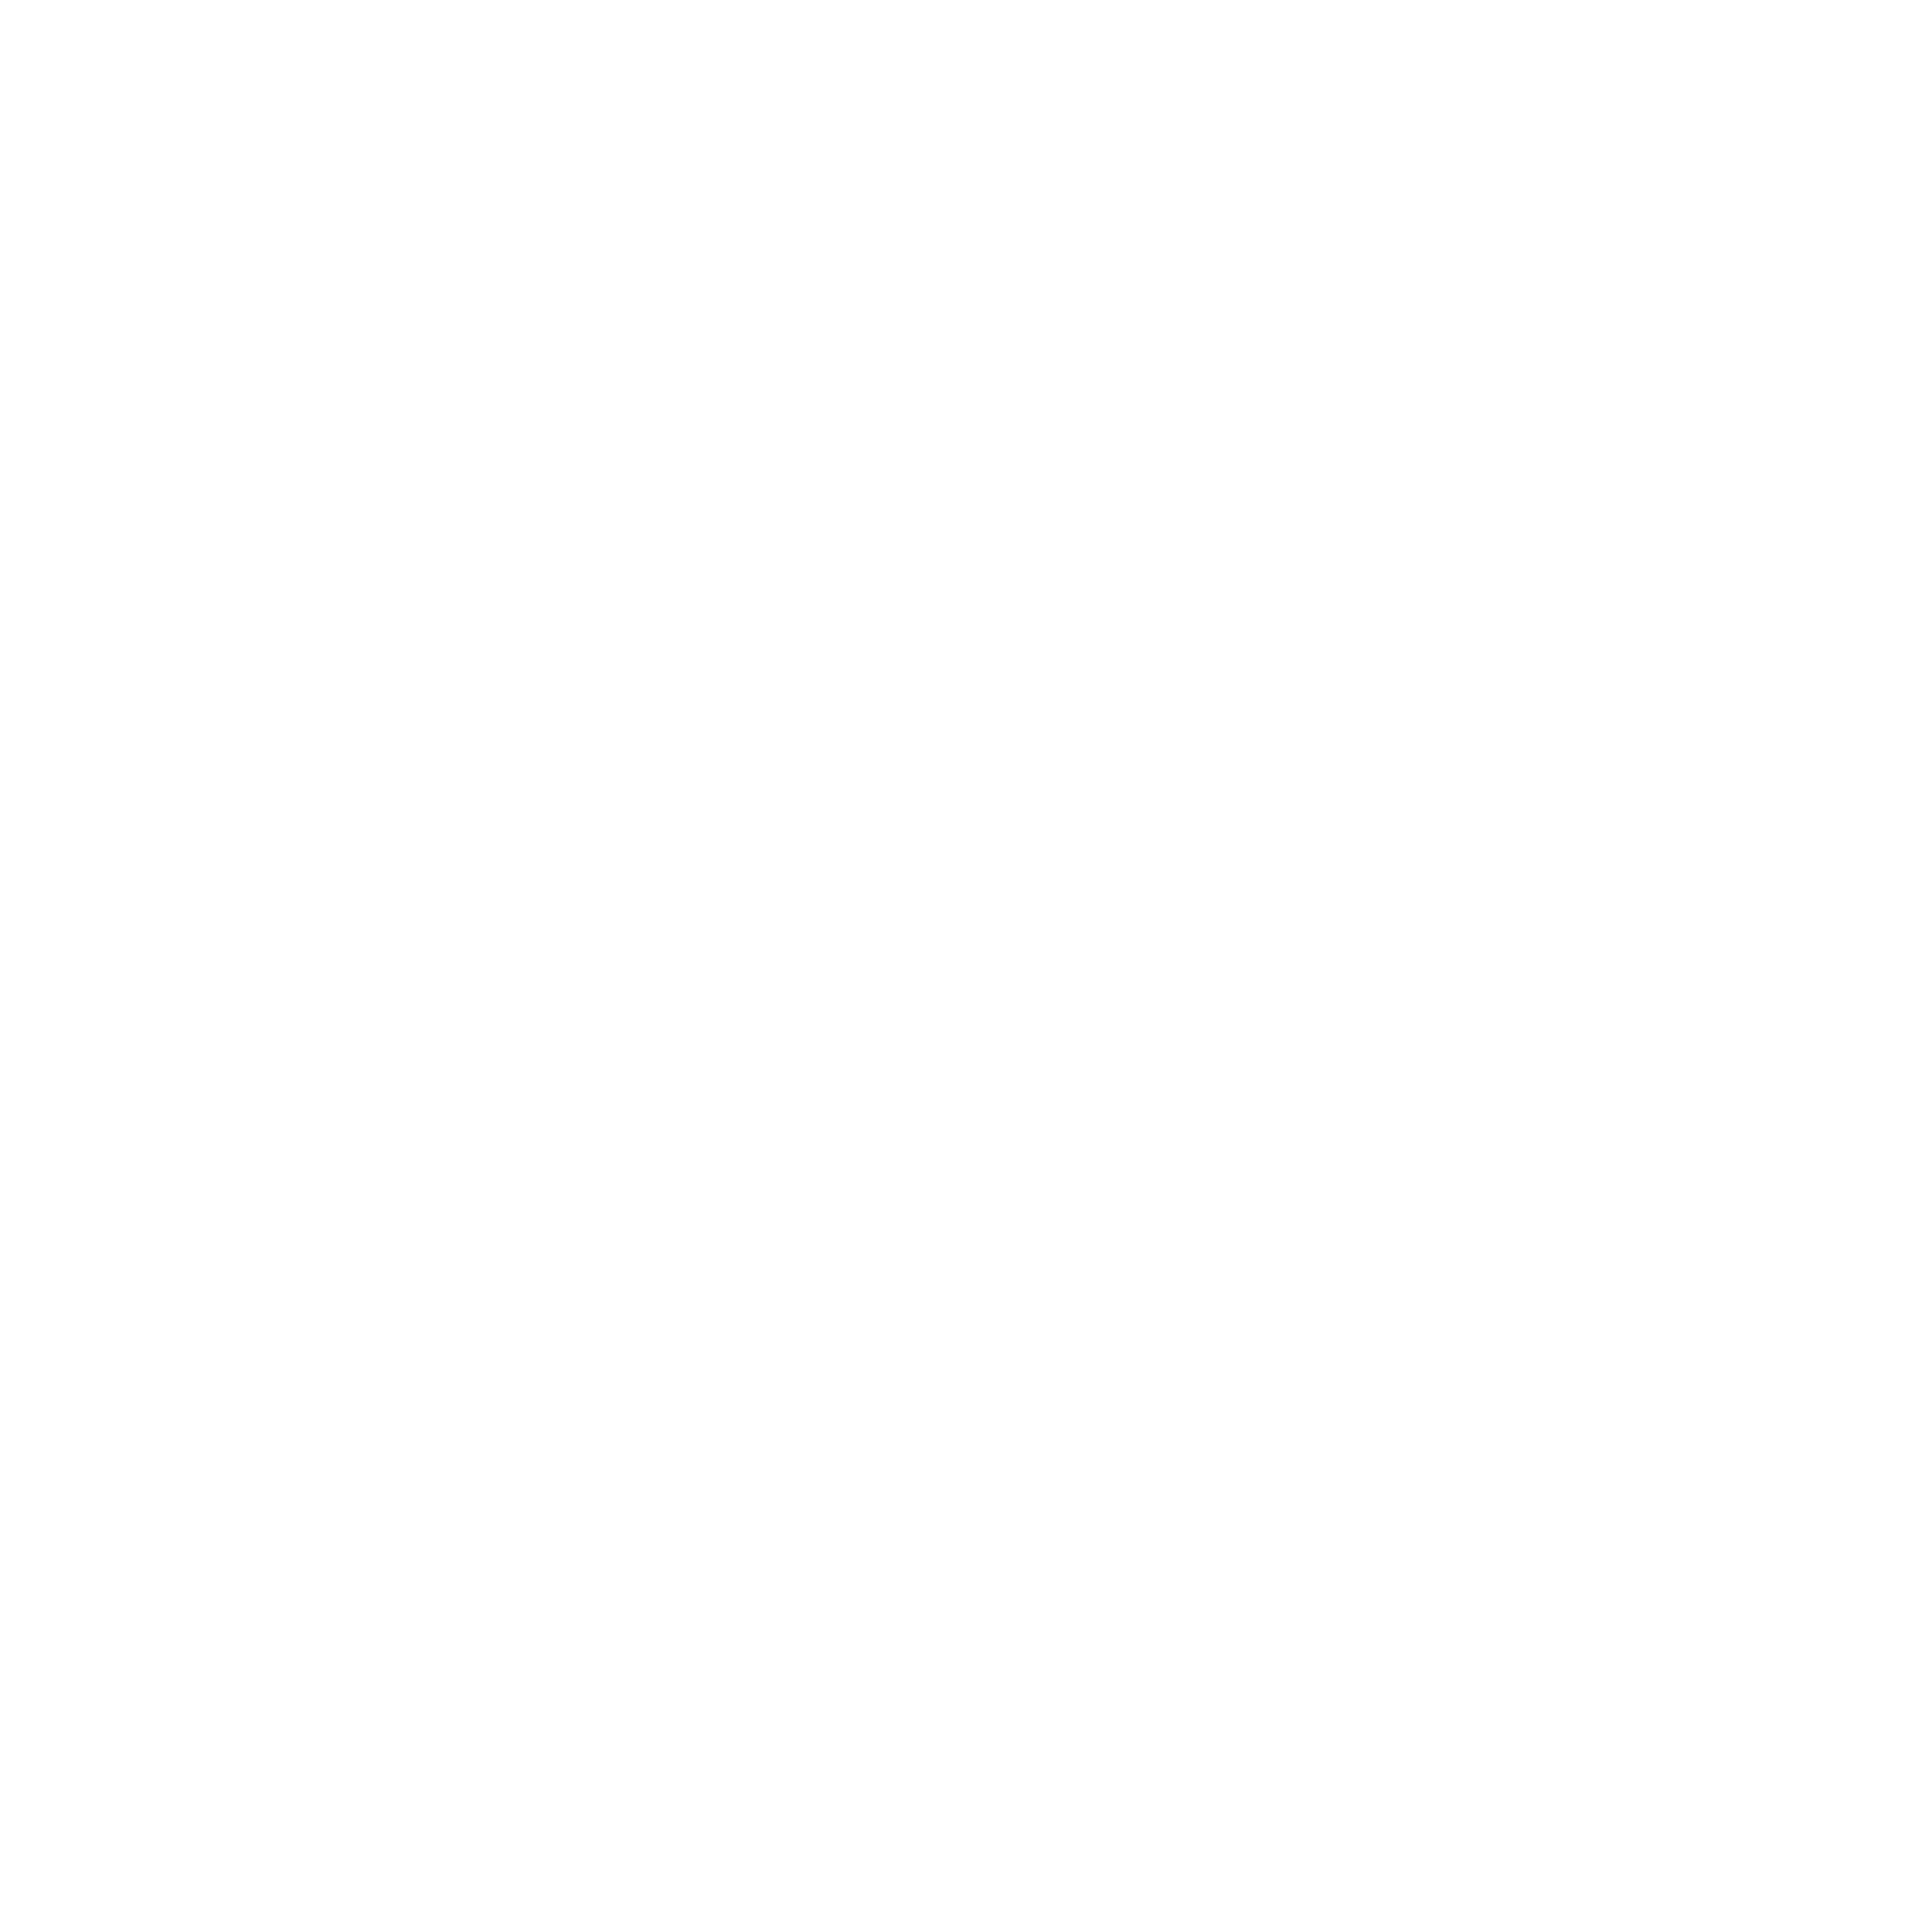 Soom Soom Logo